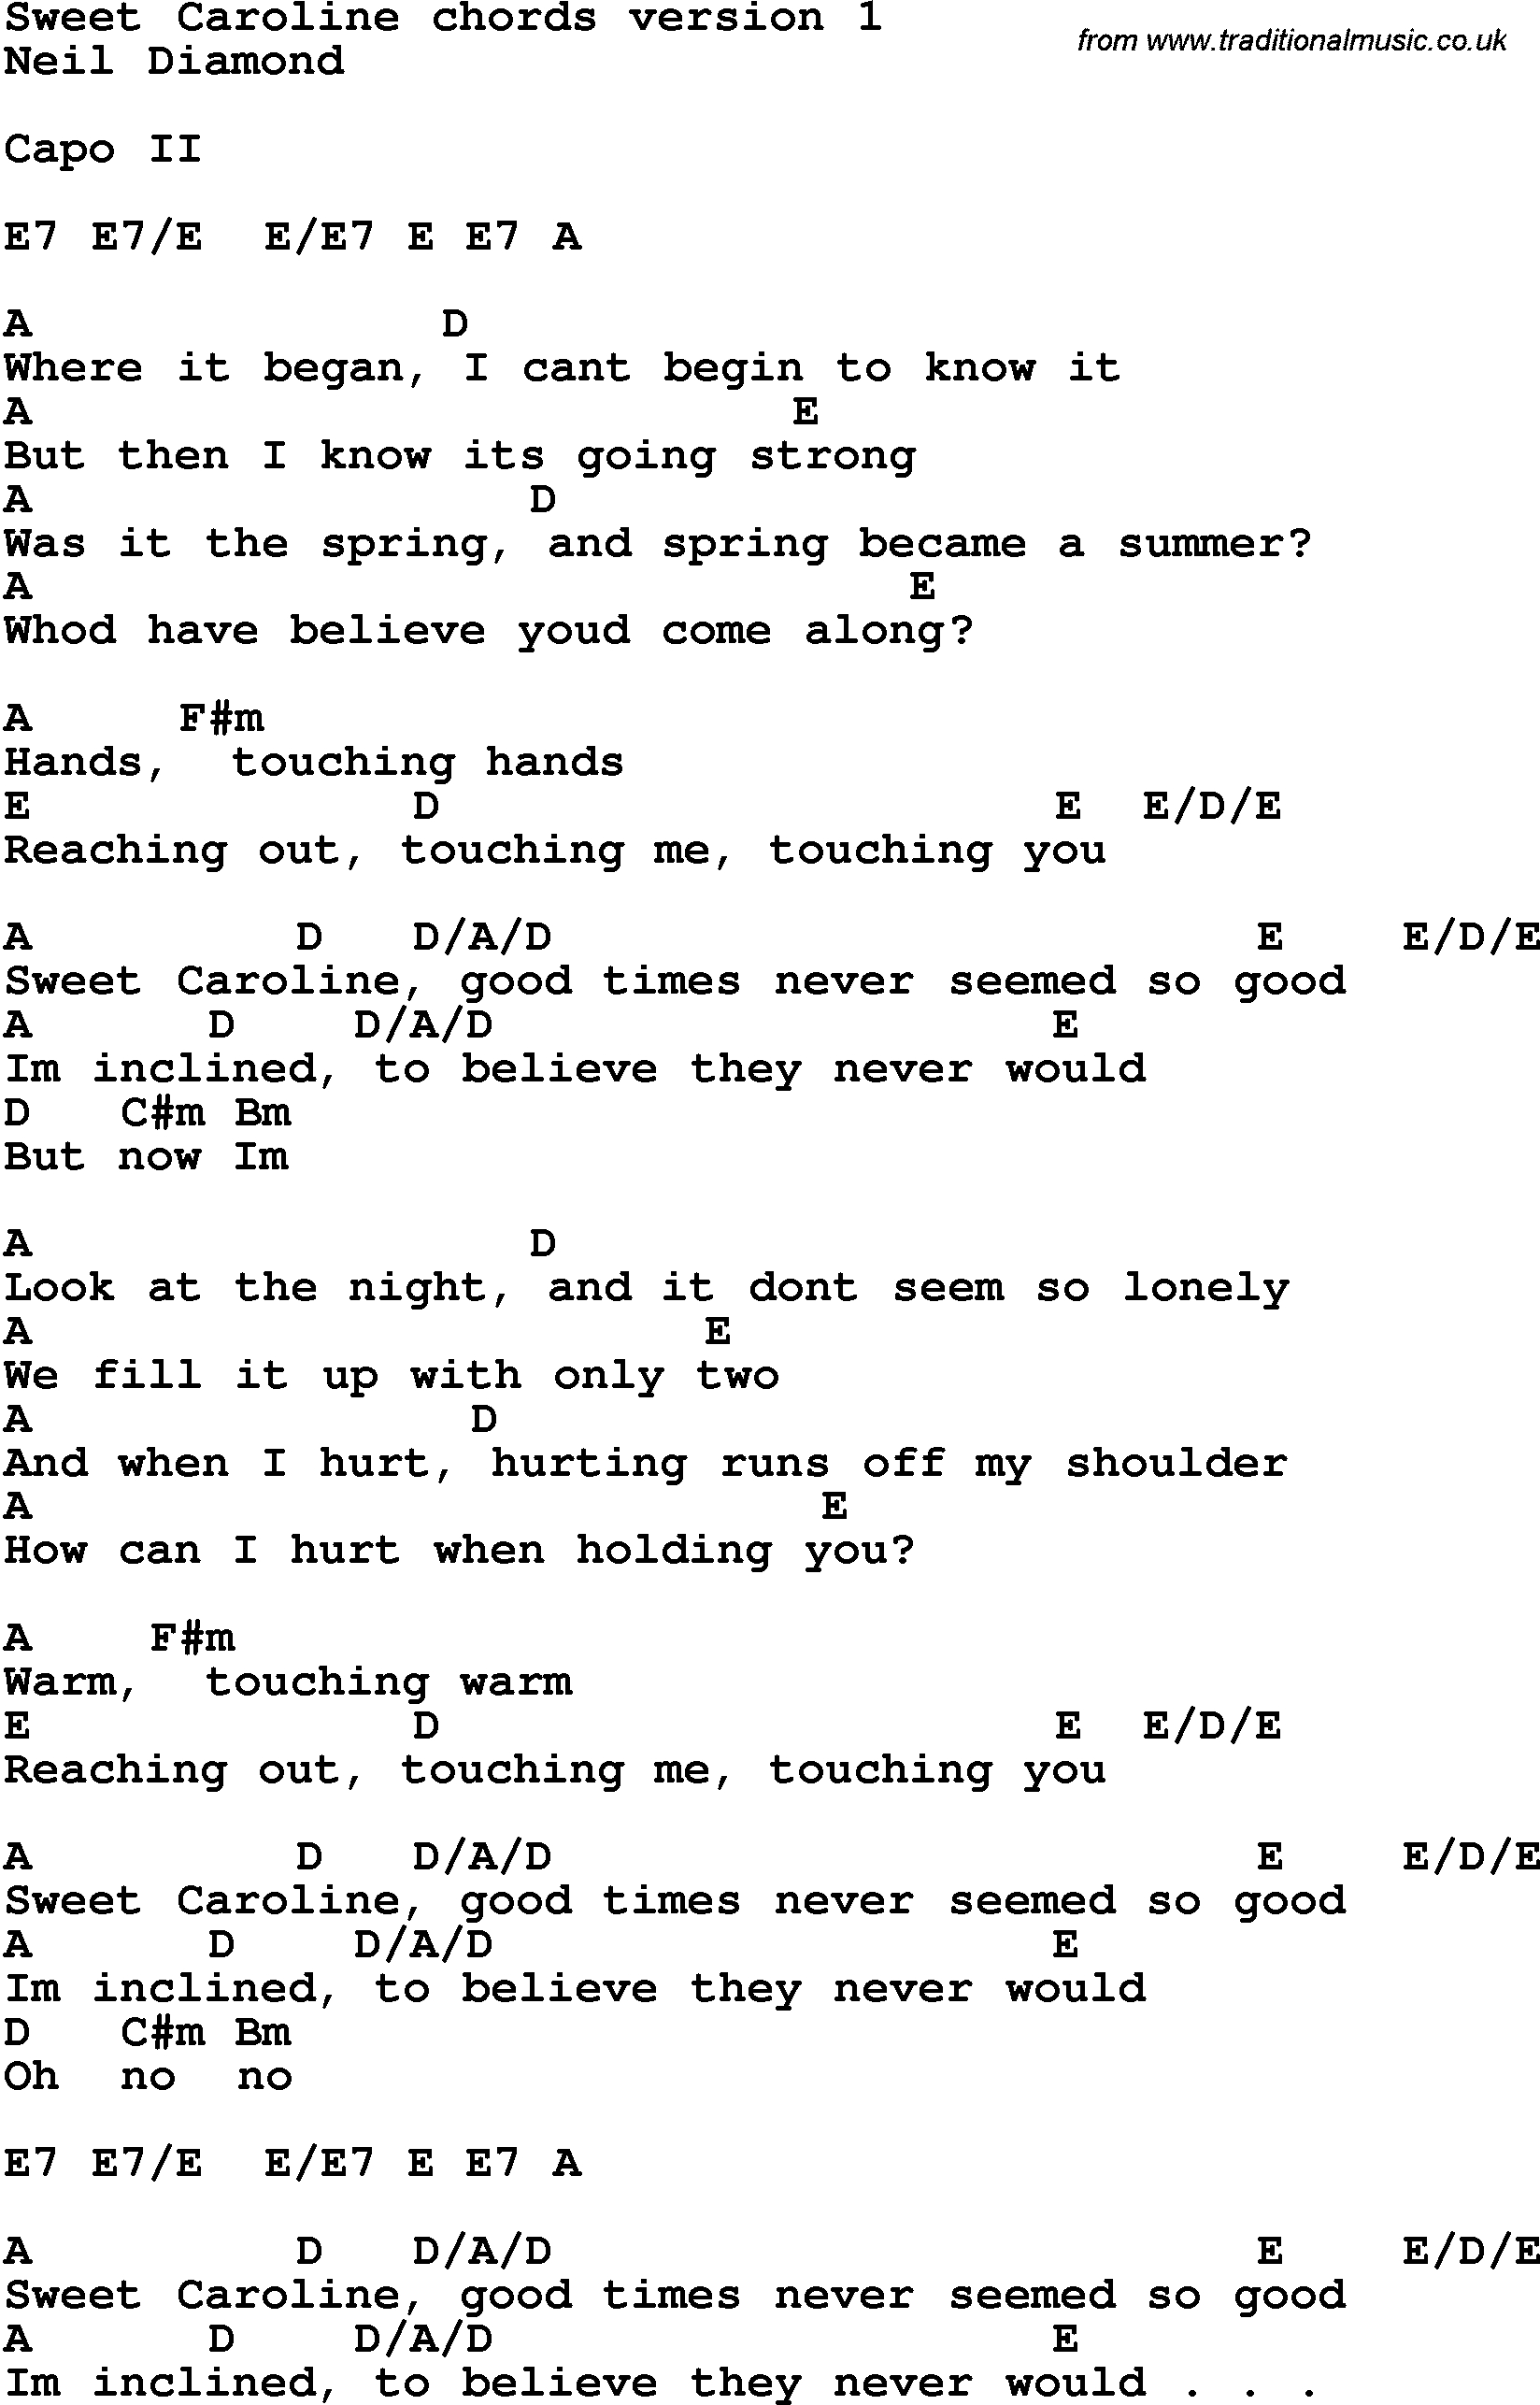 Song Lyrics With Guitar Chords For Sweet Caroline - Free Guitar Sheet Music For Popular Songs Printable